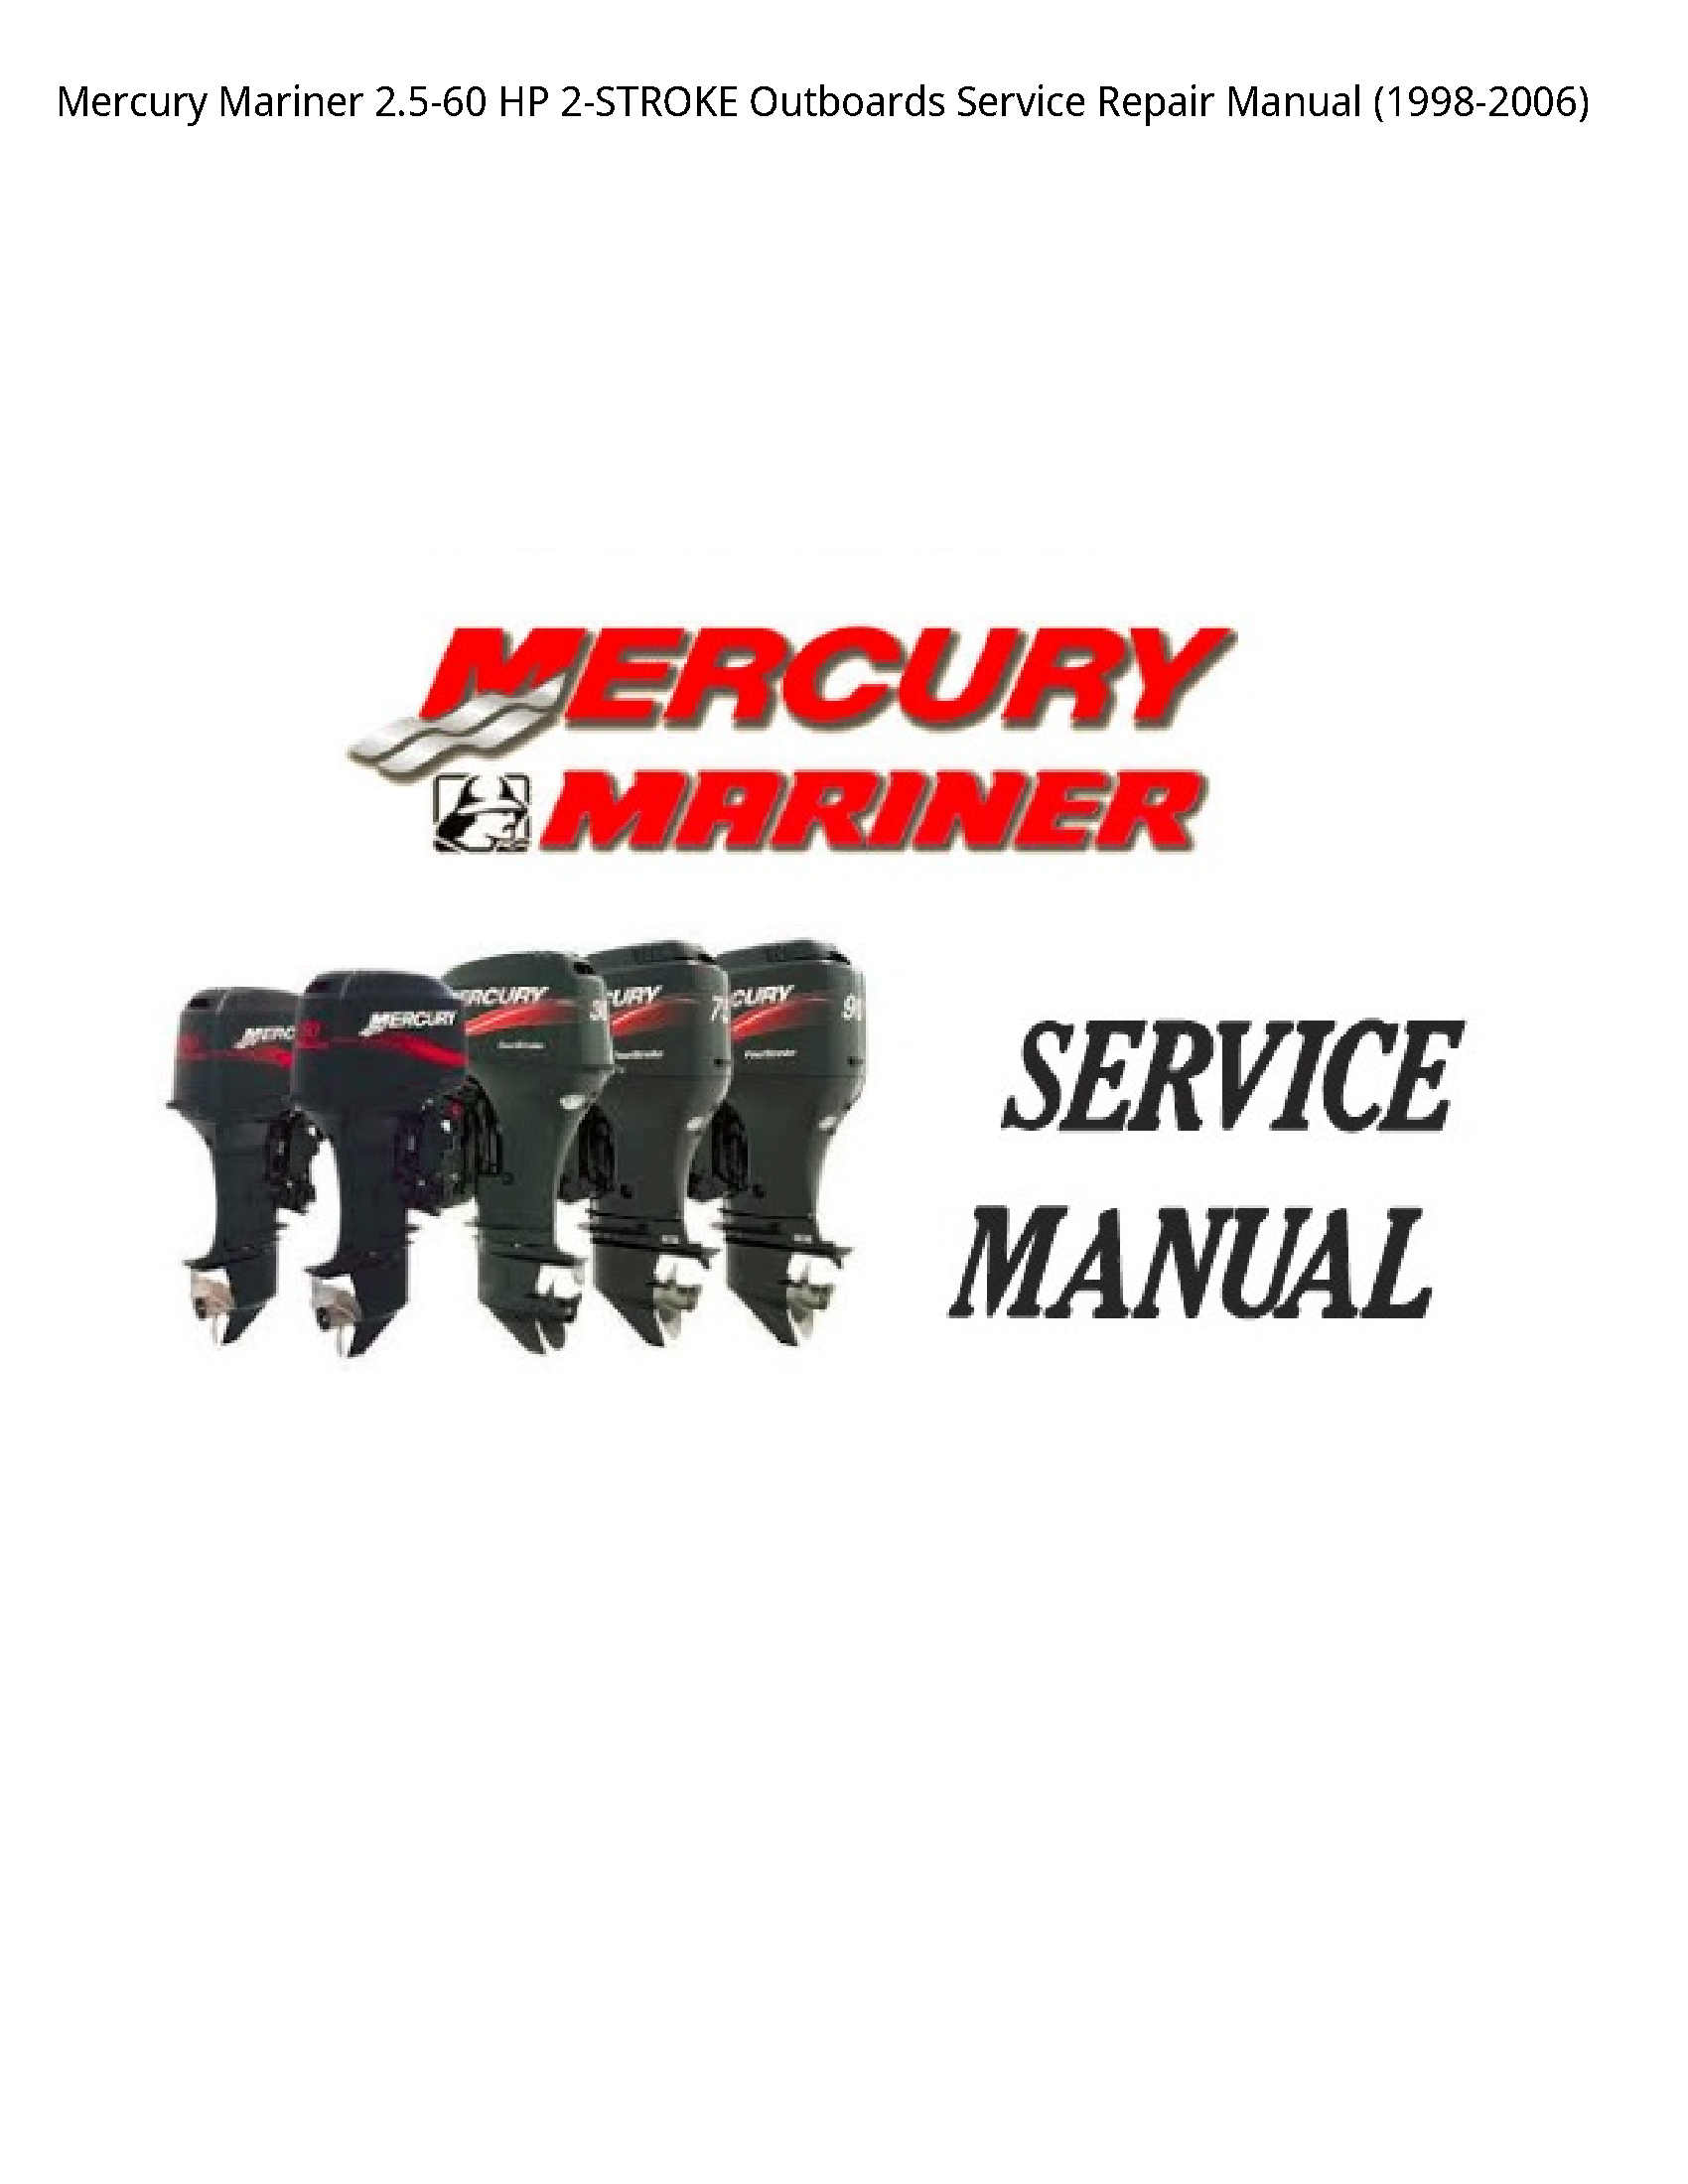 Mercury Mariner 2.5-60 HP Outboards manual